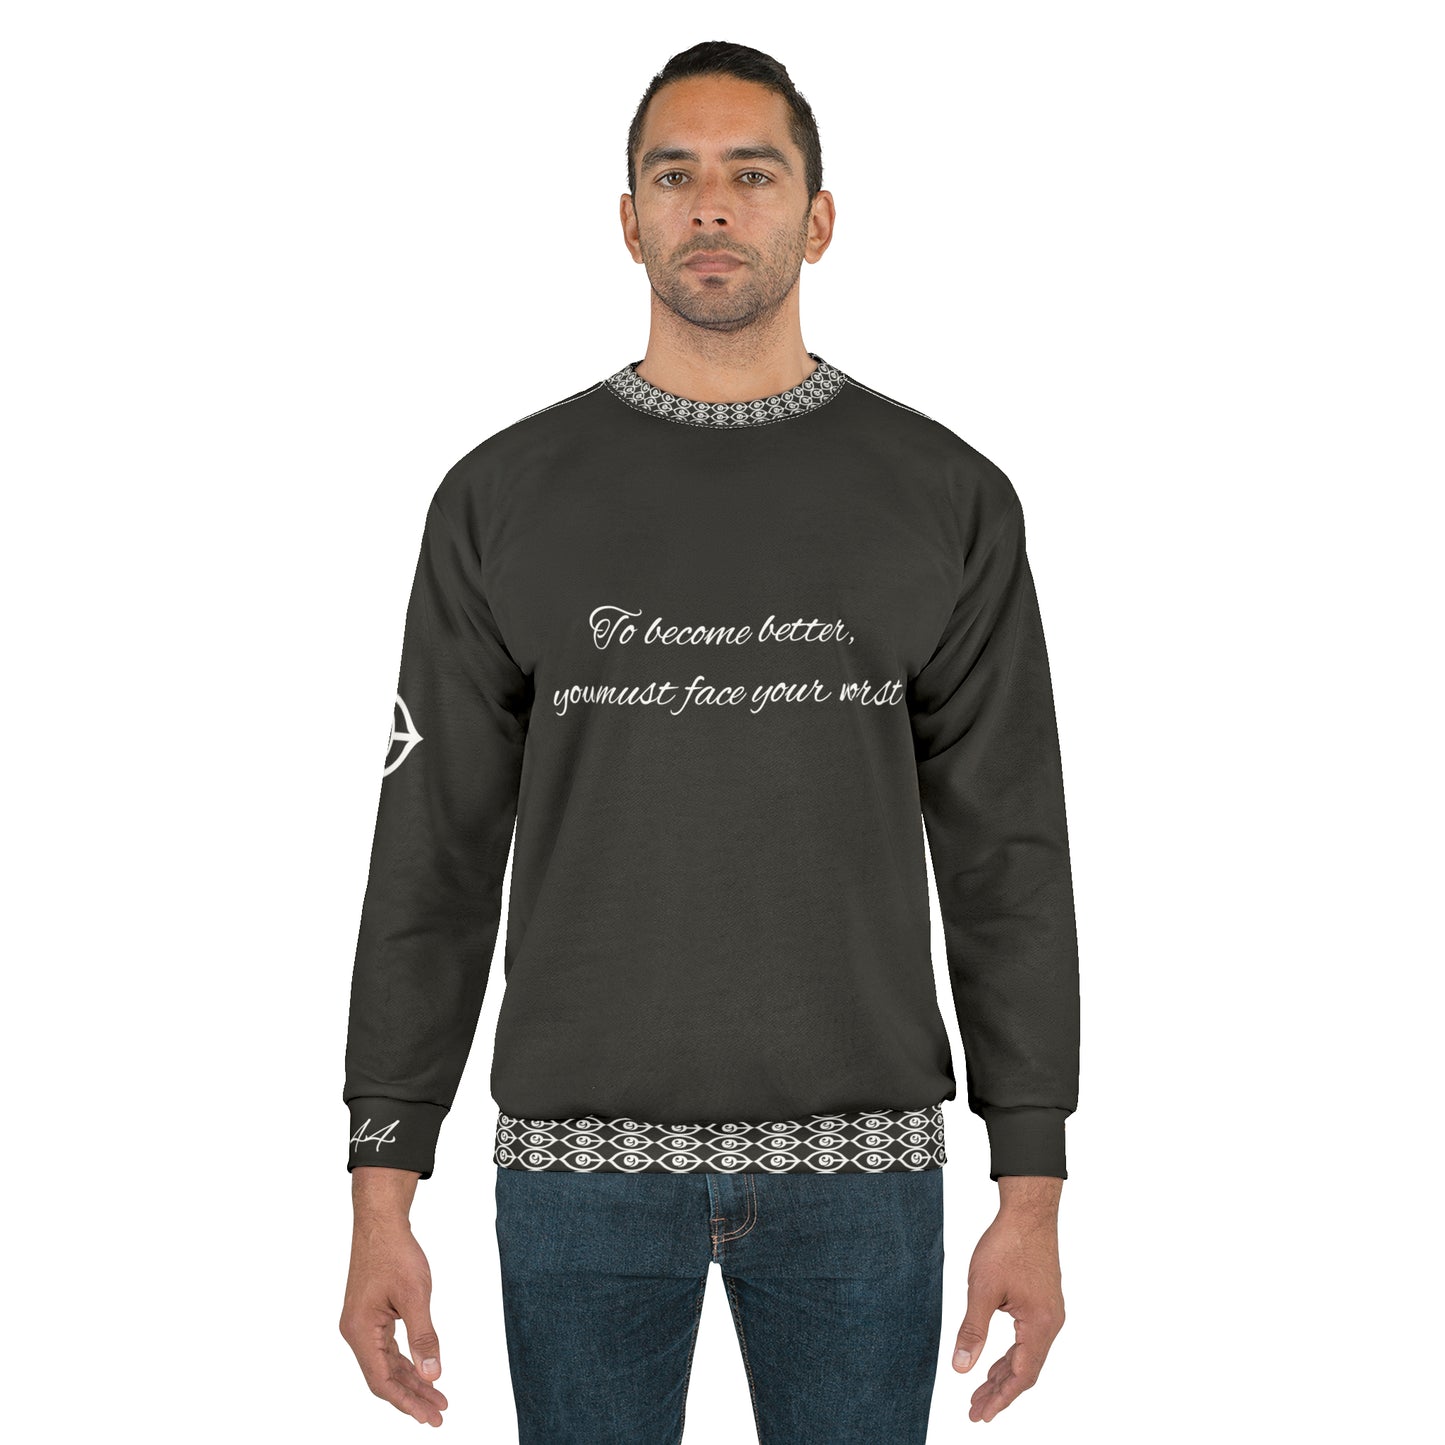 I Still Love H.E.R. : Law 44 - Unisex Sweatshirt